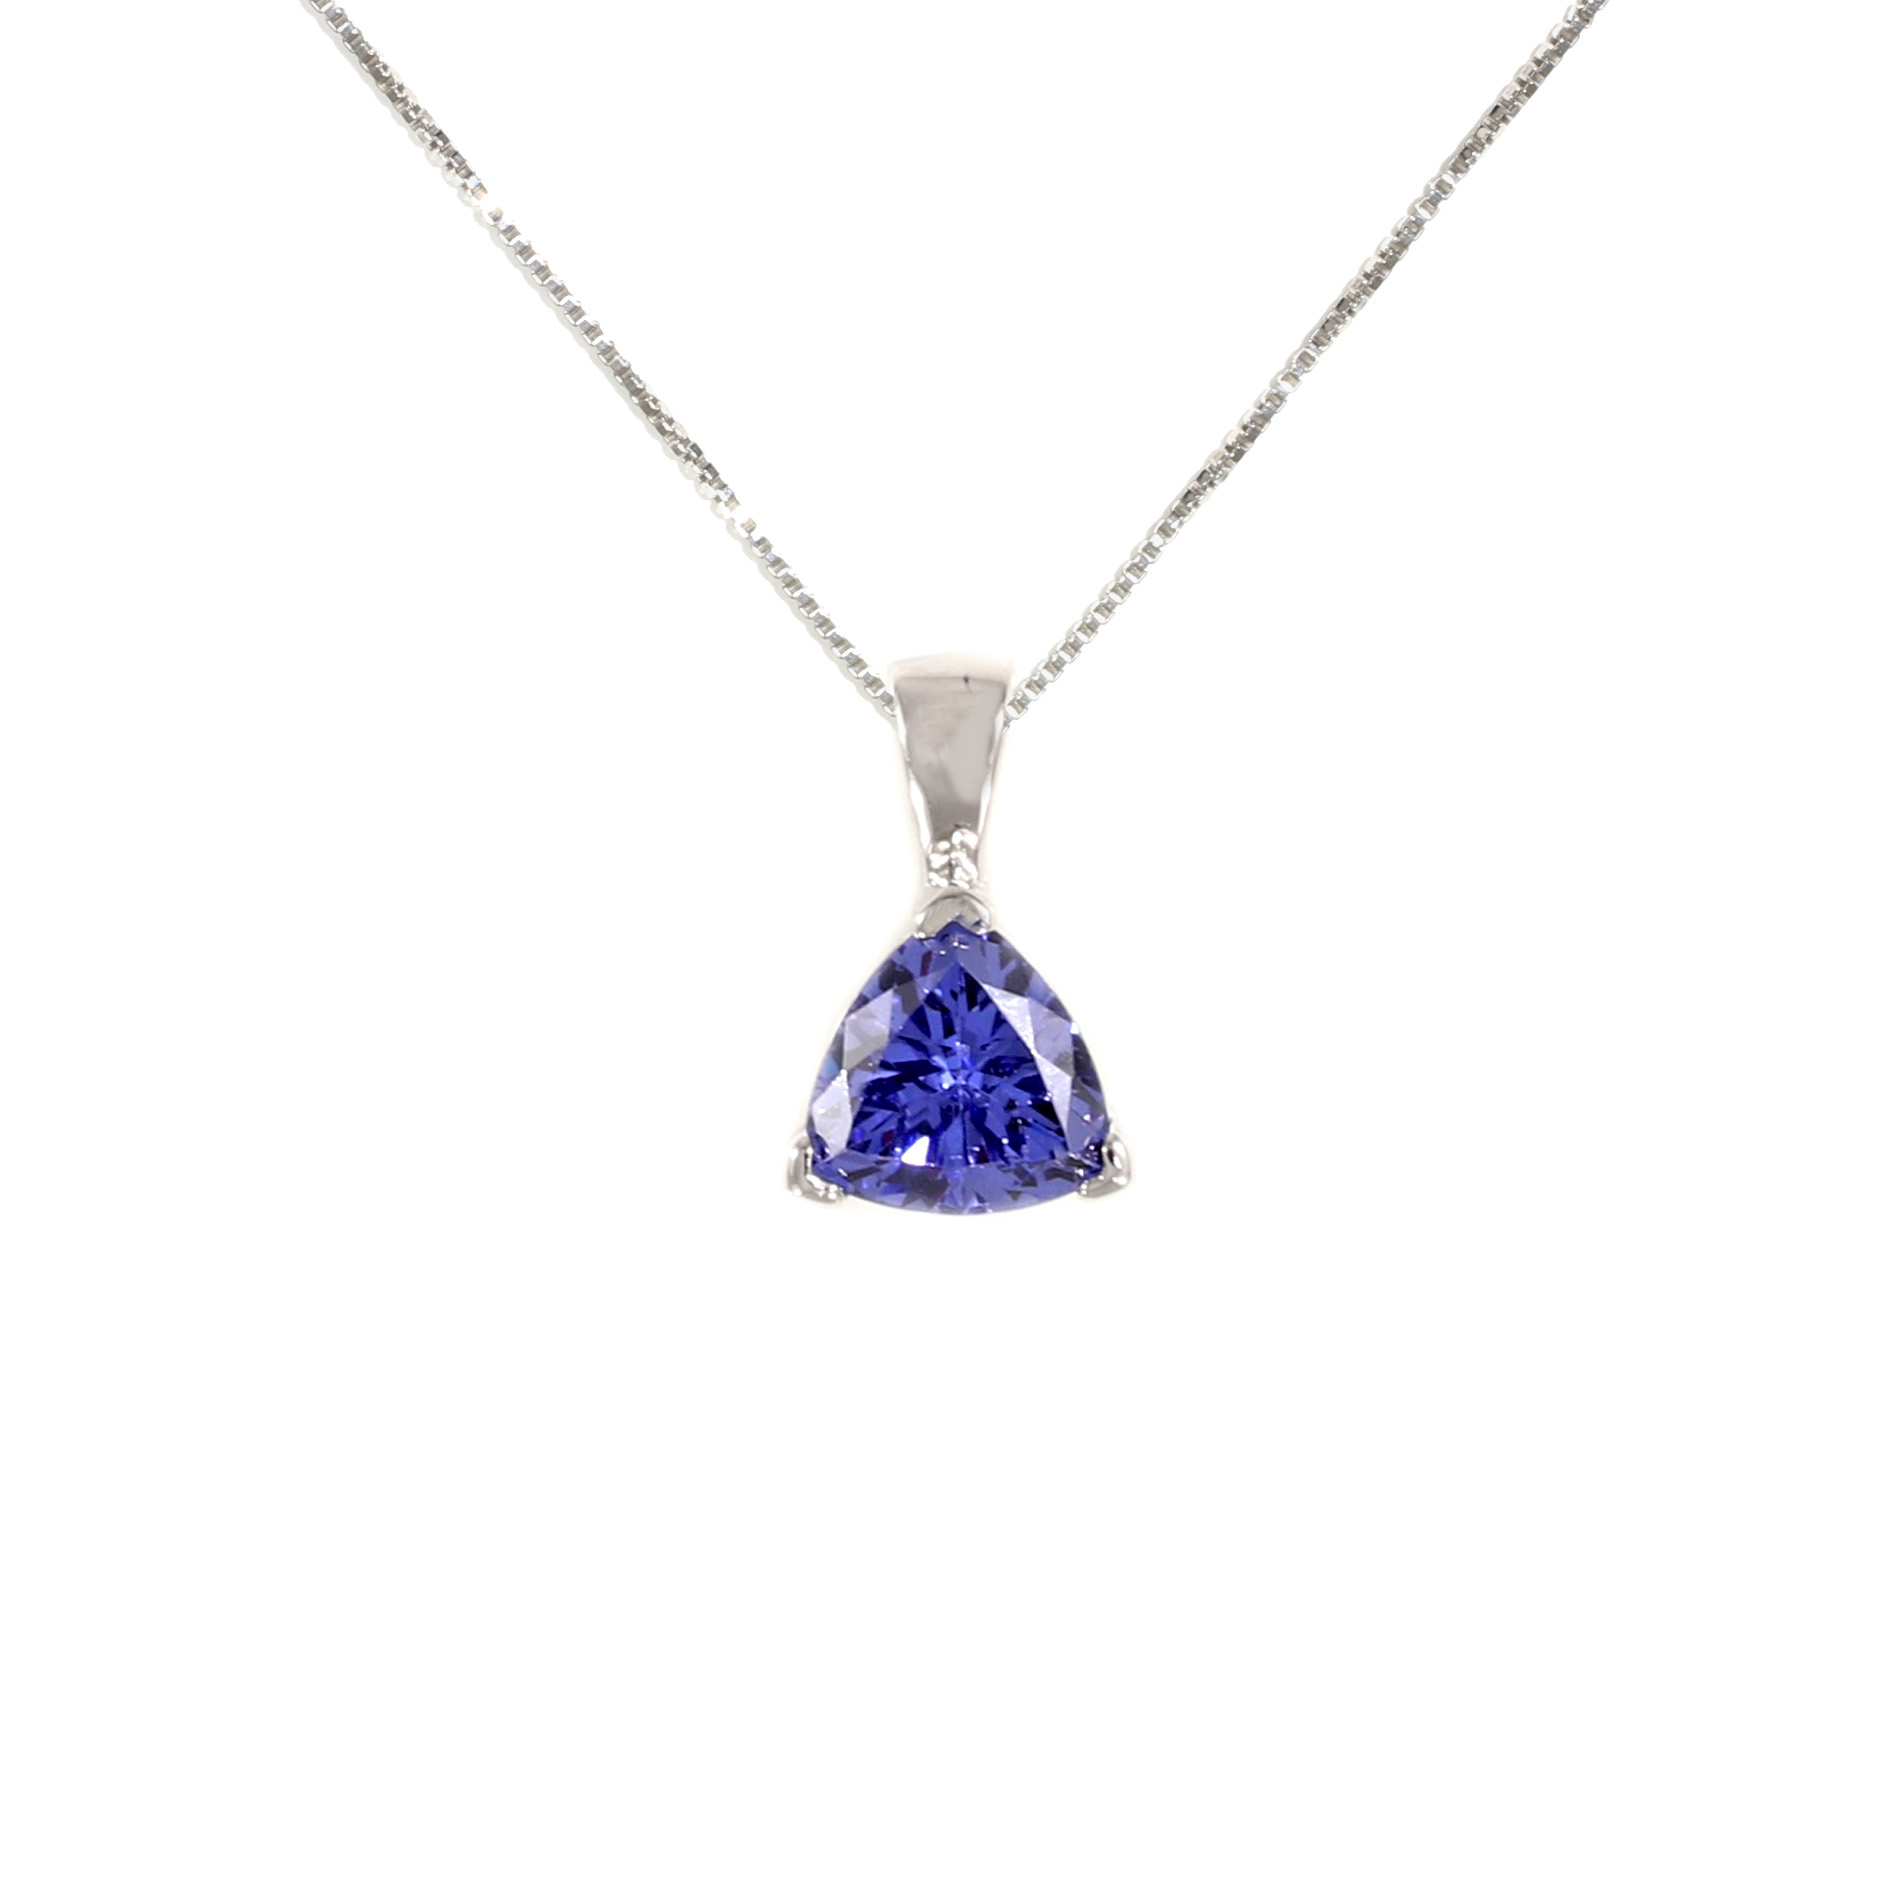 Buy Trillion Cut Diamond Necklace, Trillion Diamond Necklace, 14K Solitaire  Necklace, Delicate Necklace, Gold Diamond Necklace. Online in India - Etsy